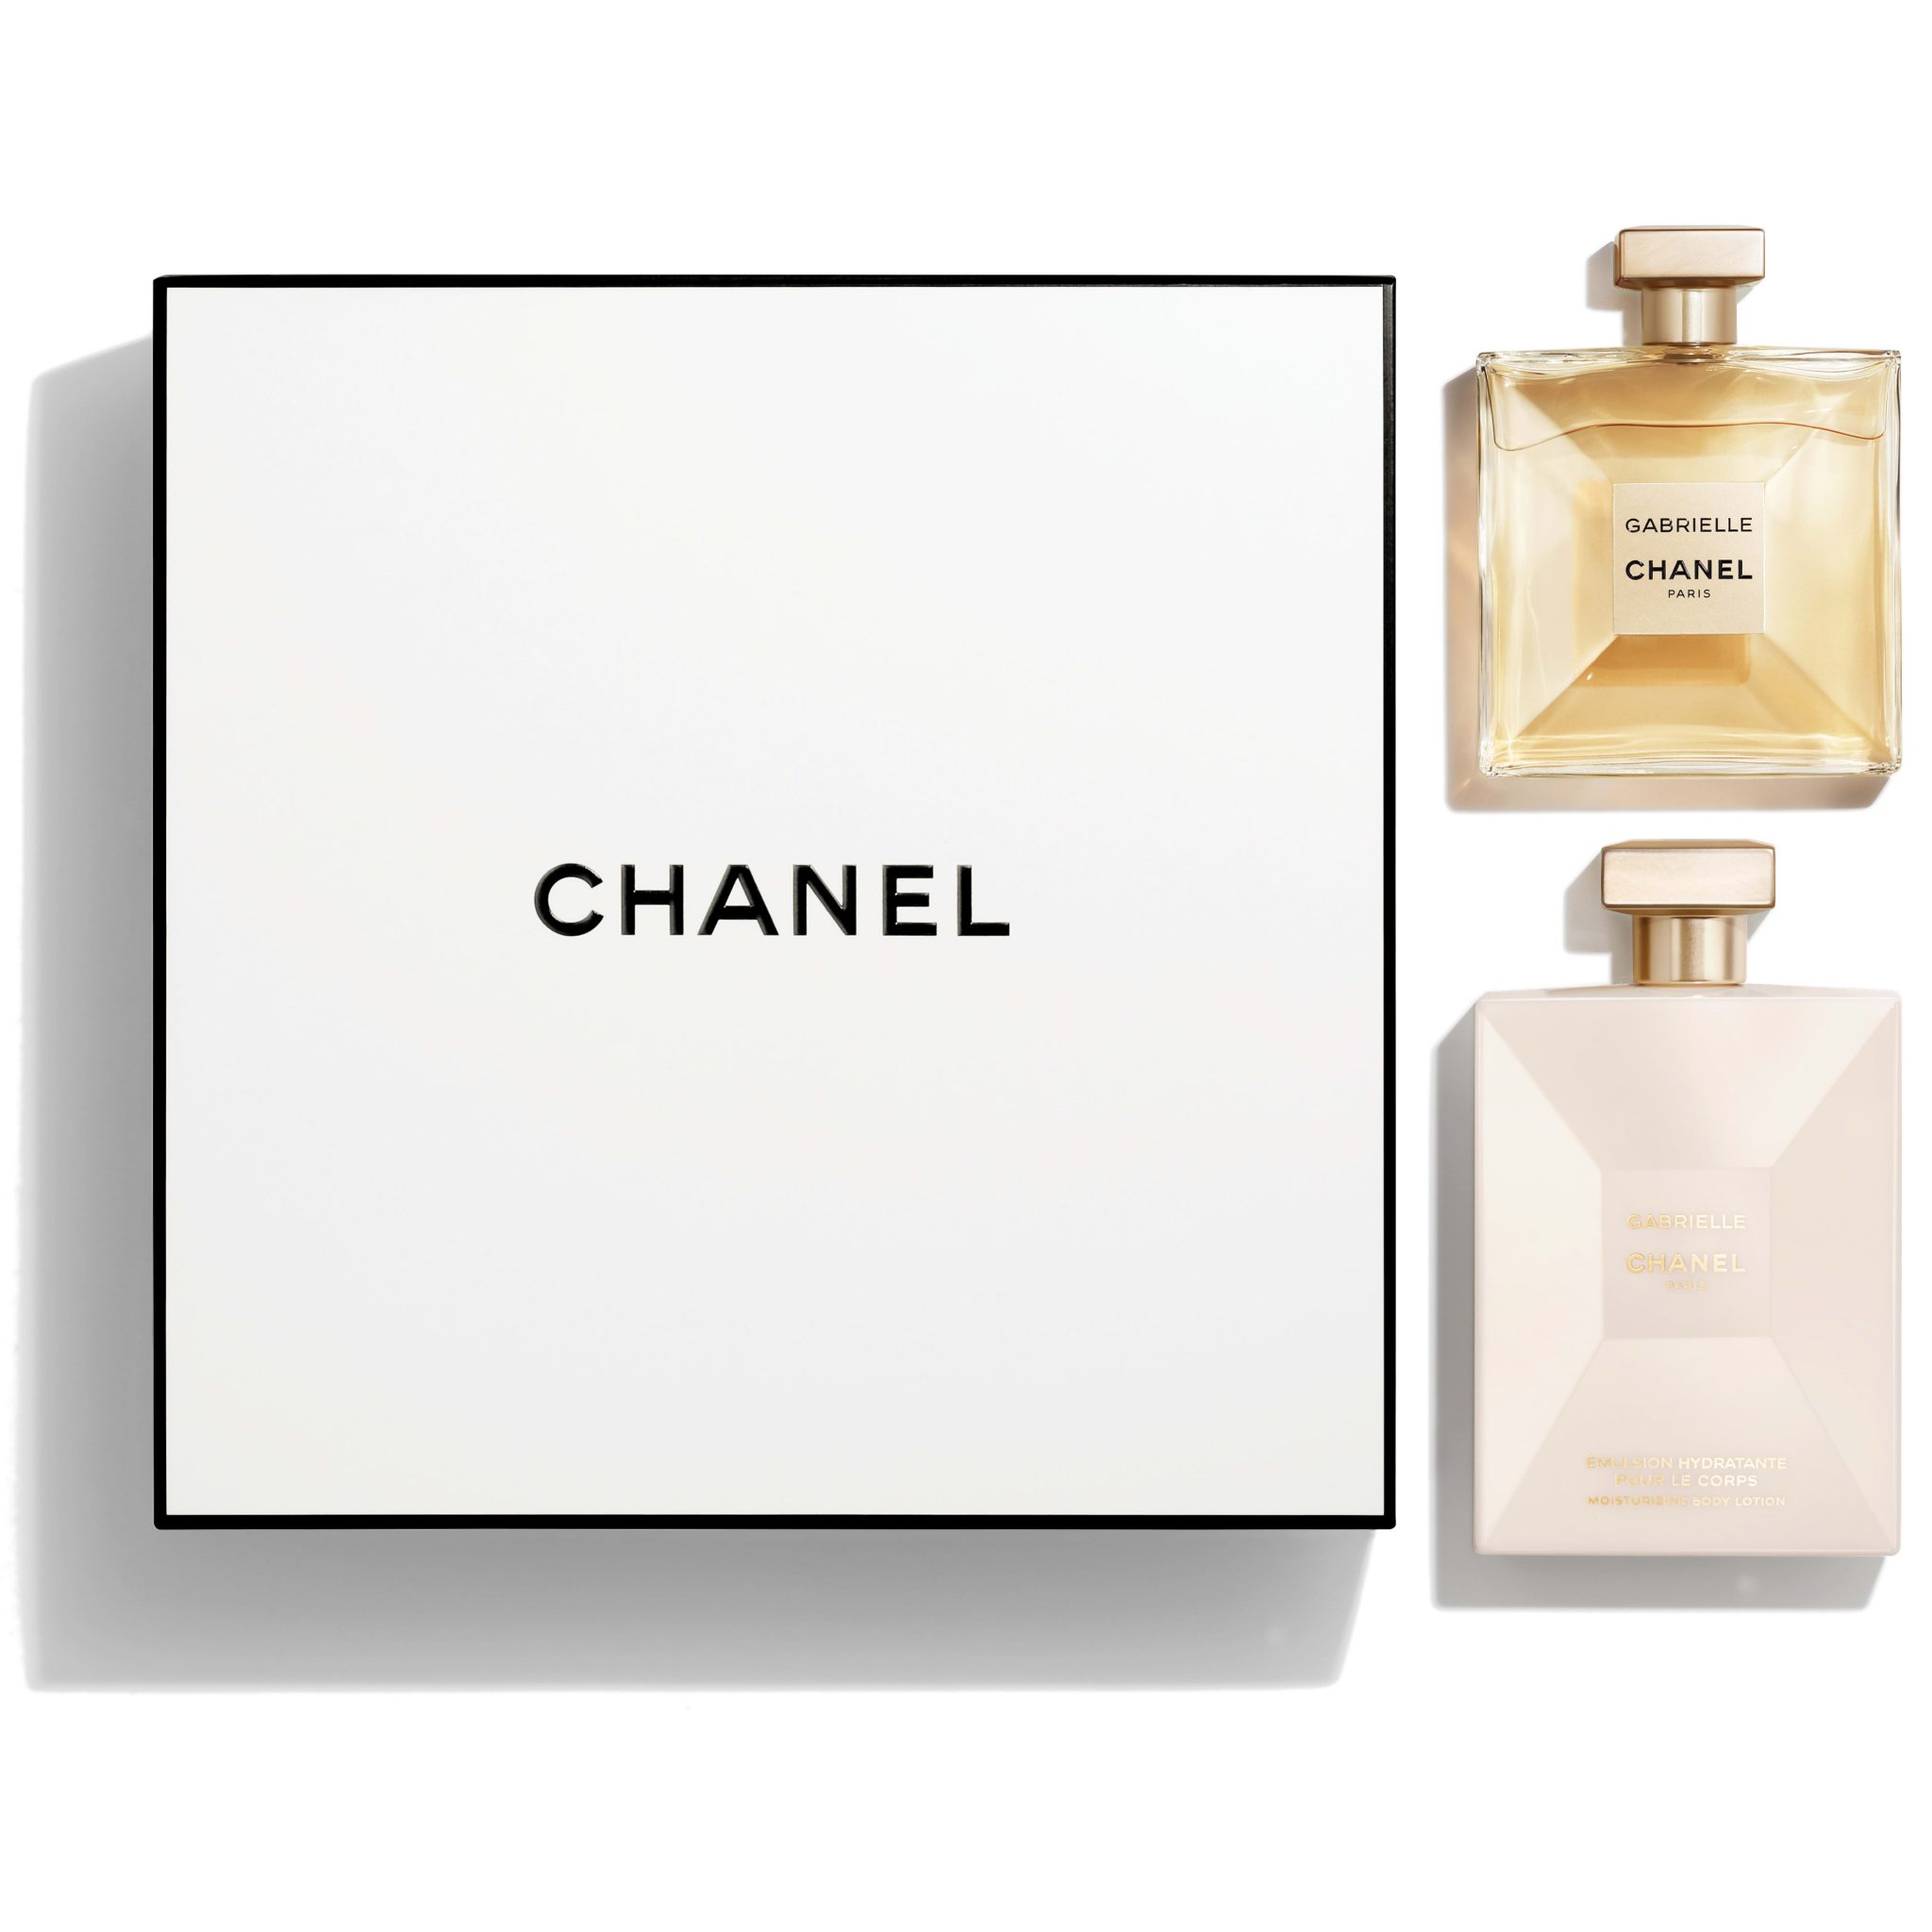 GABRIELLE CHANEL Moisturising Body Lotion 200 ml – Opulent Fragrances